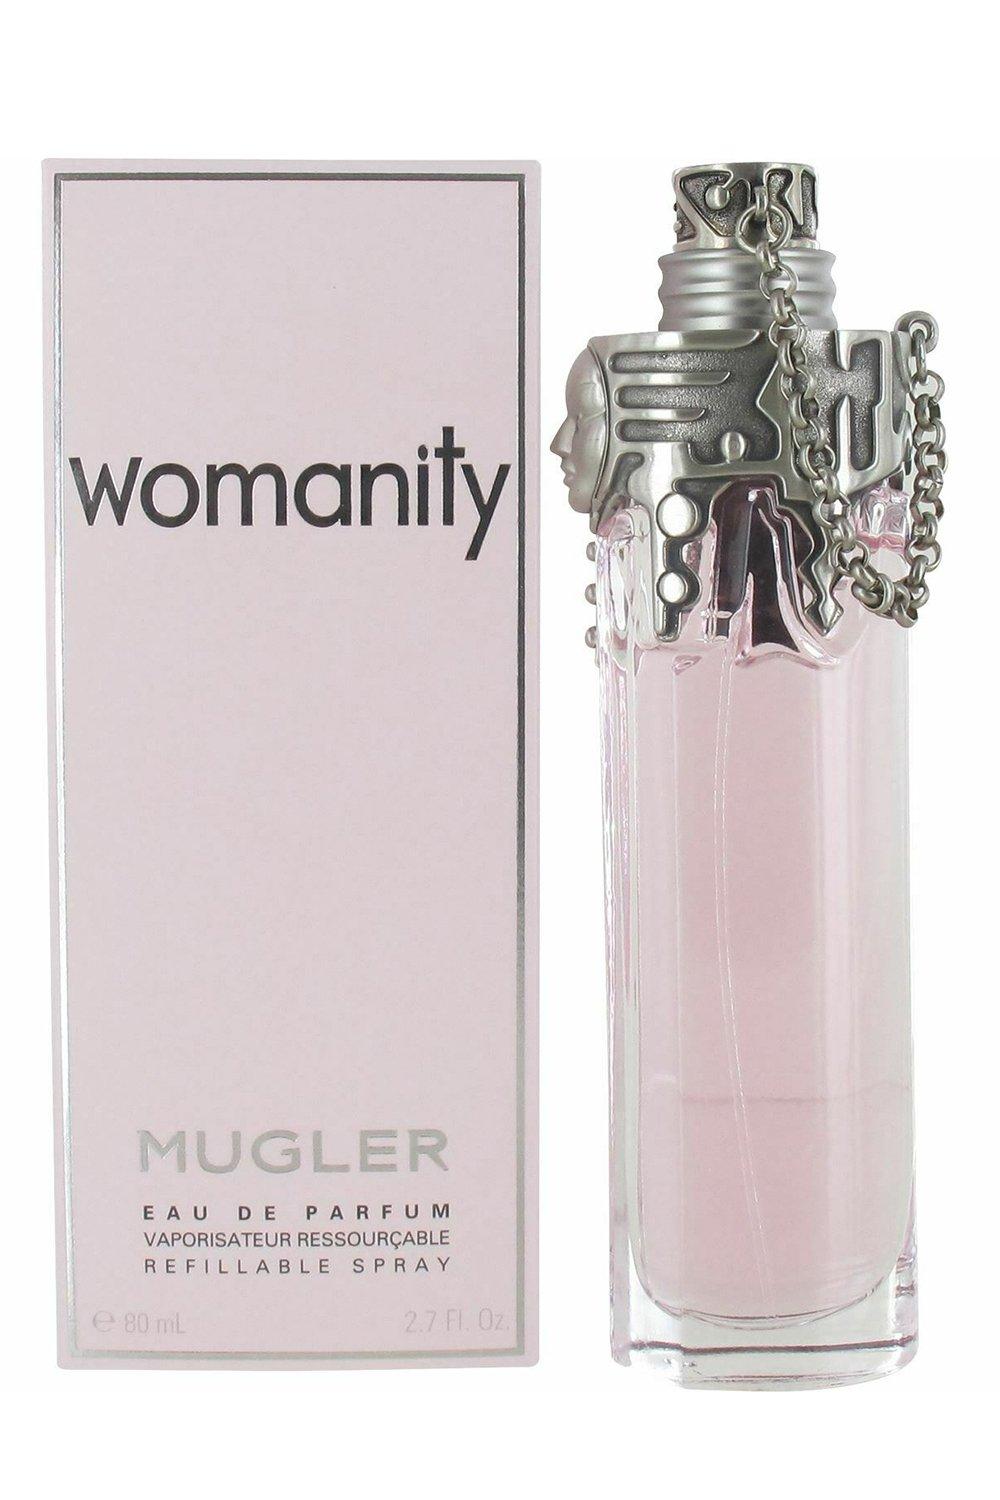 Thierry Mugler Womanity 80ml EDP Spray 